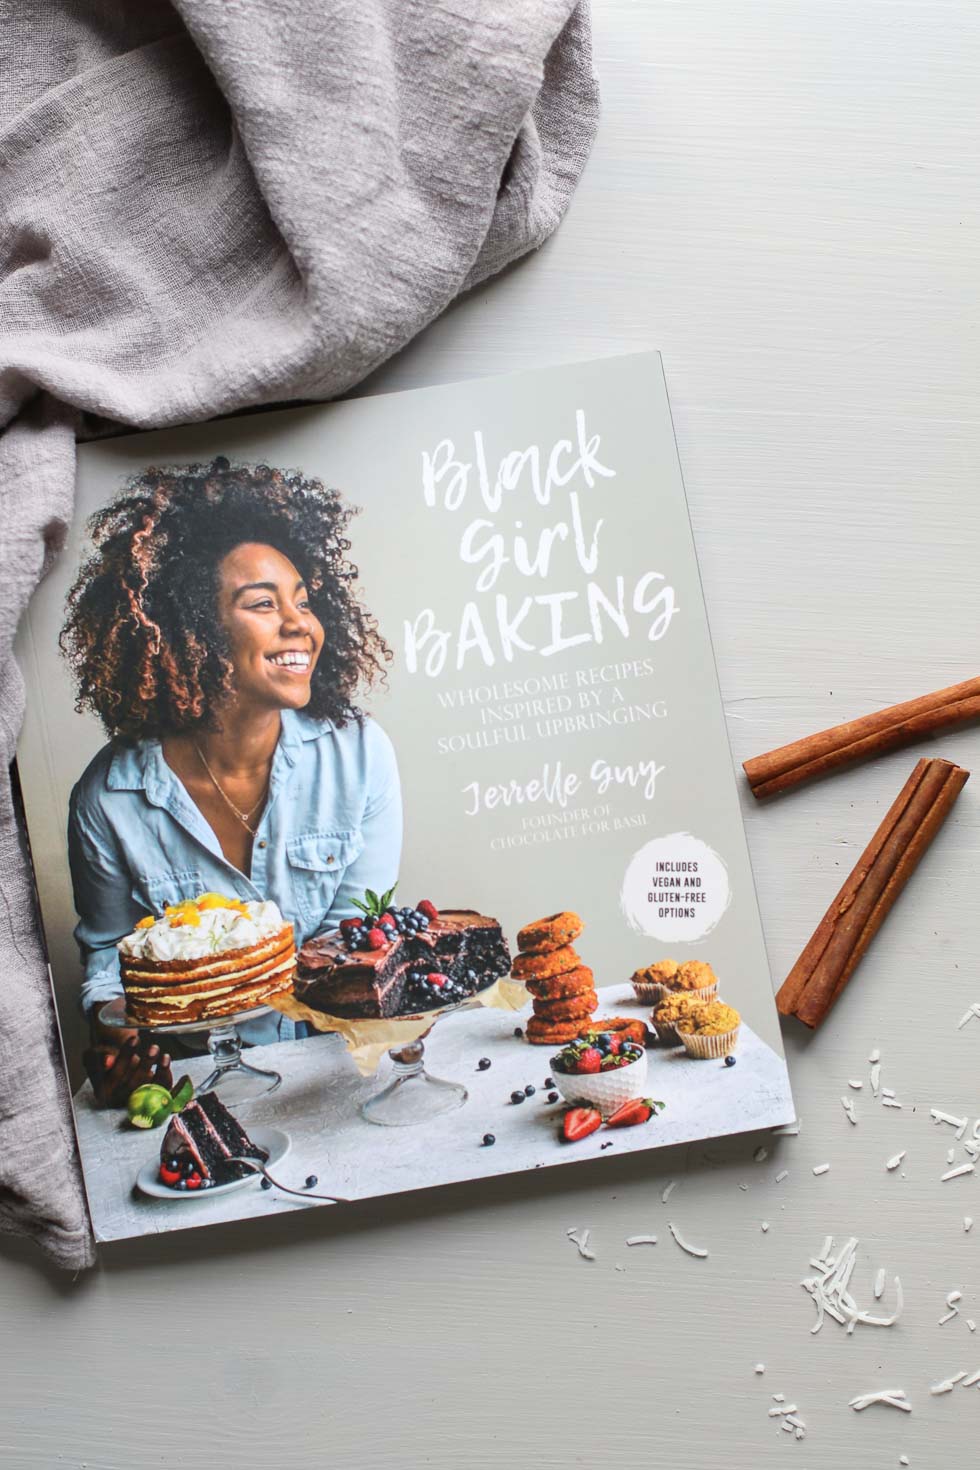 Black Girl Baking Cookbook